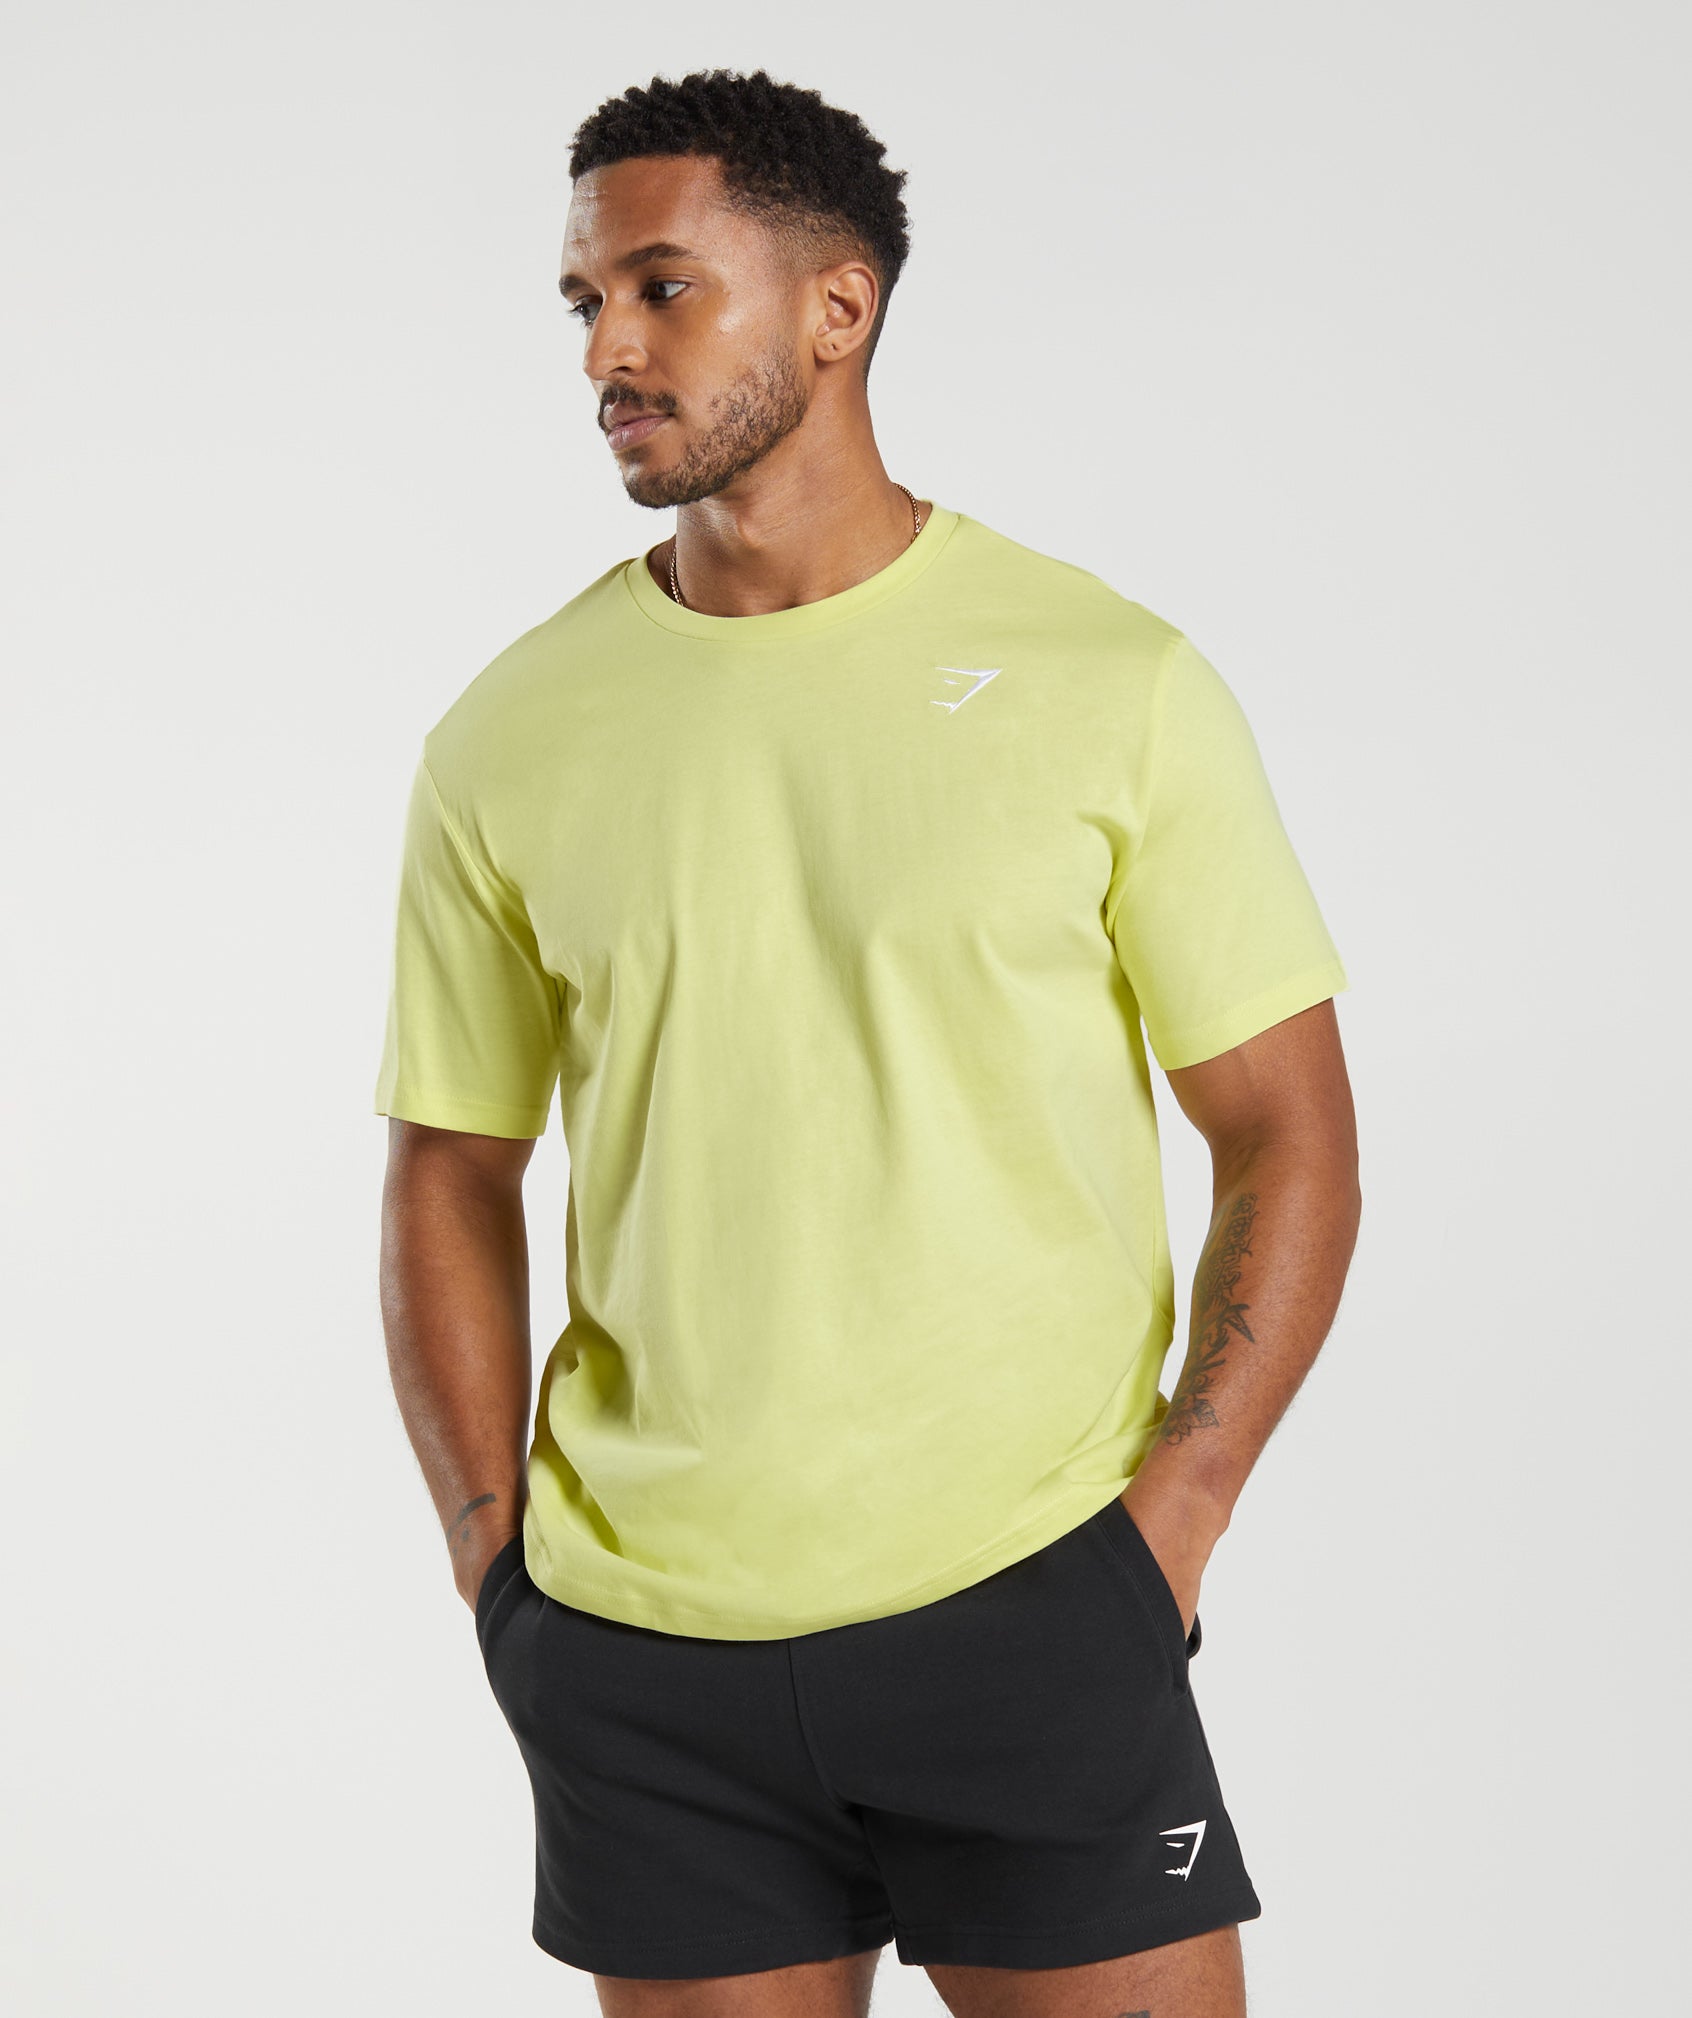 Gymshark Crest T-Shirt - Firefly Green | Gymshark